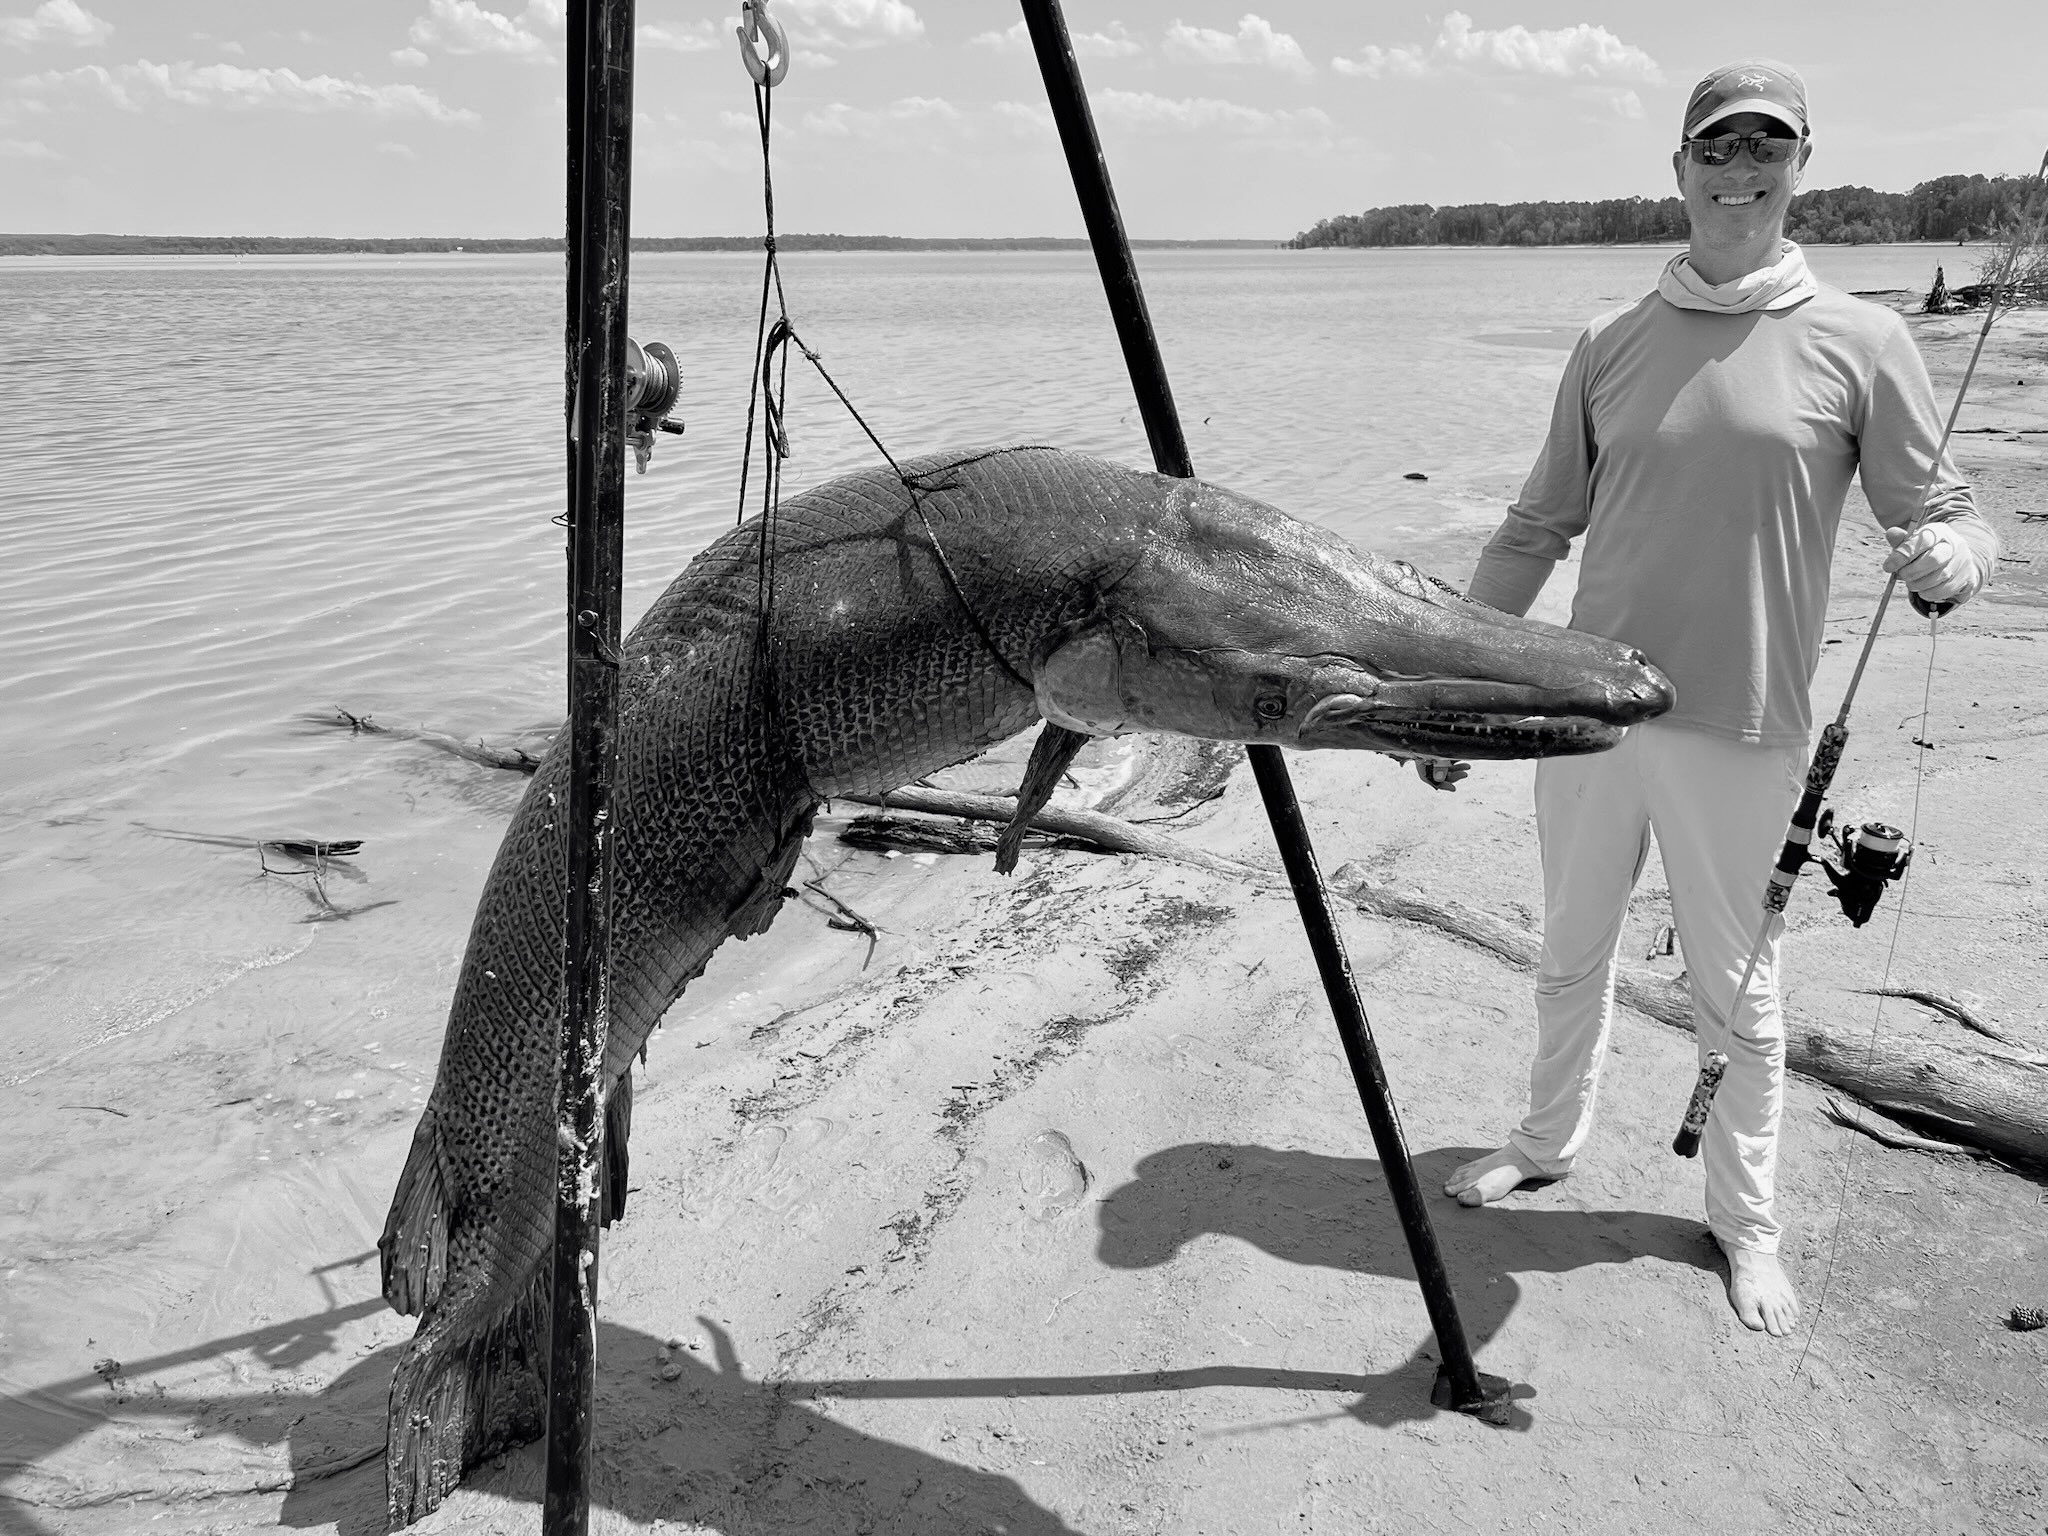 Details emerge on the world-record alligator gar caught at Sam Rayburn